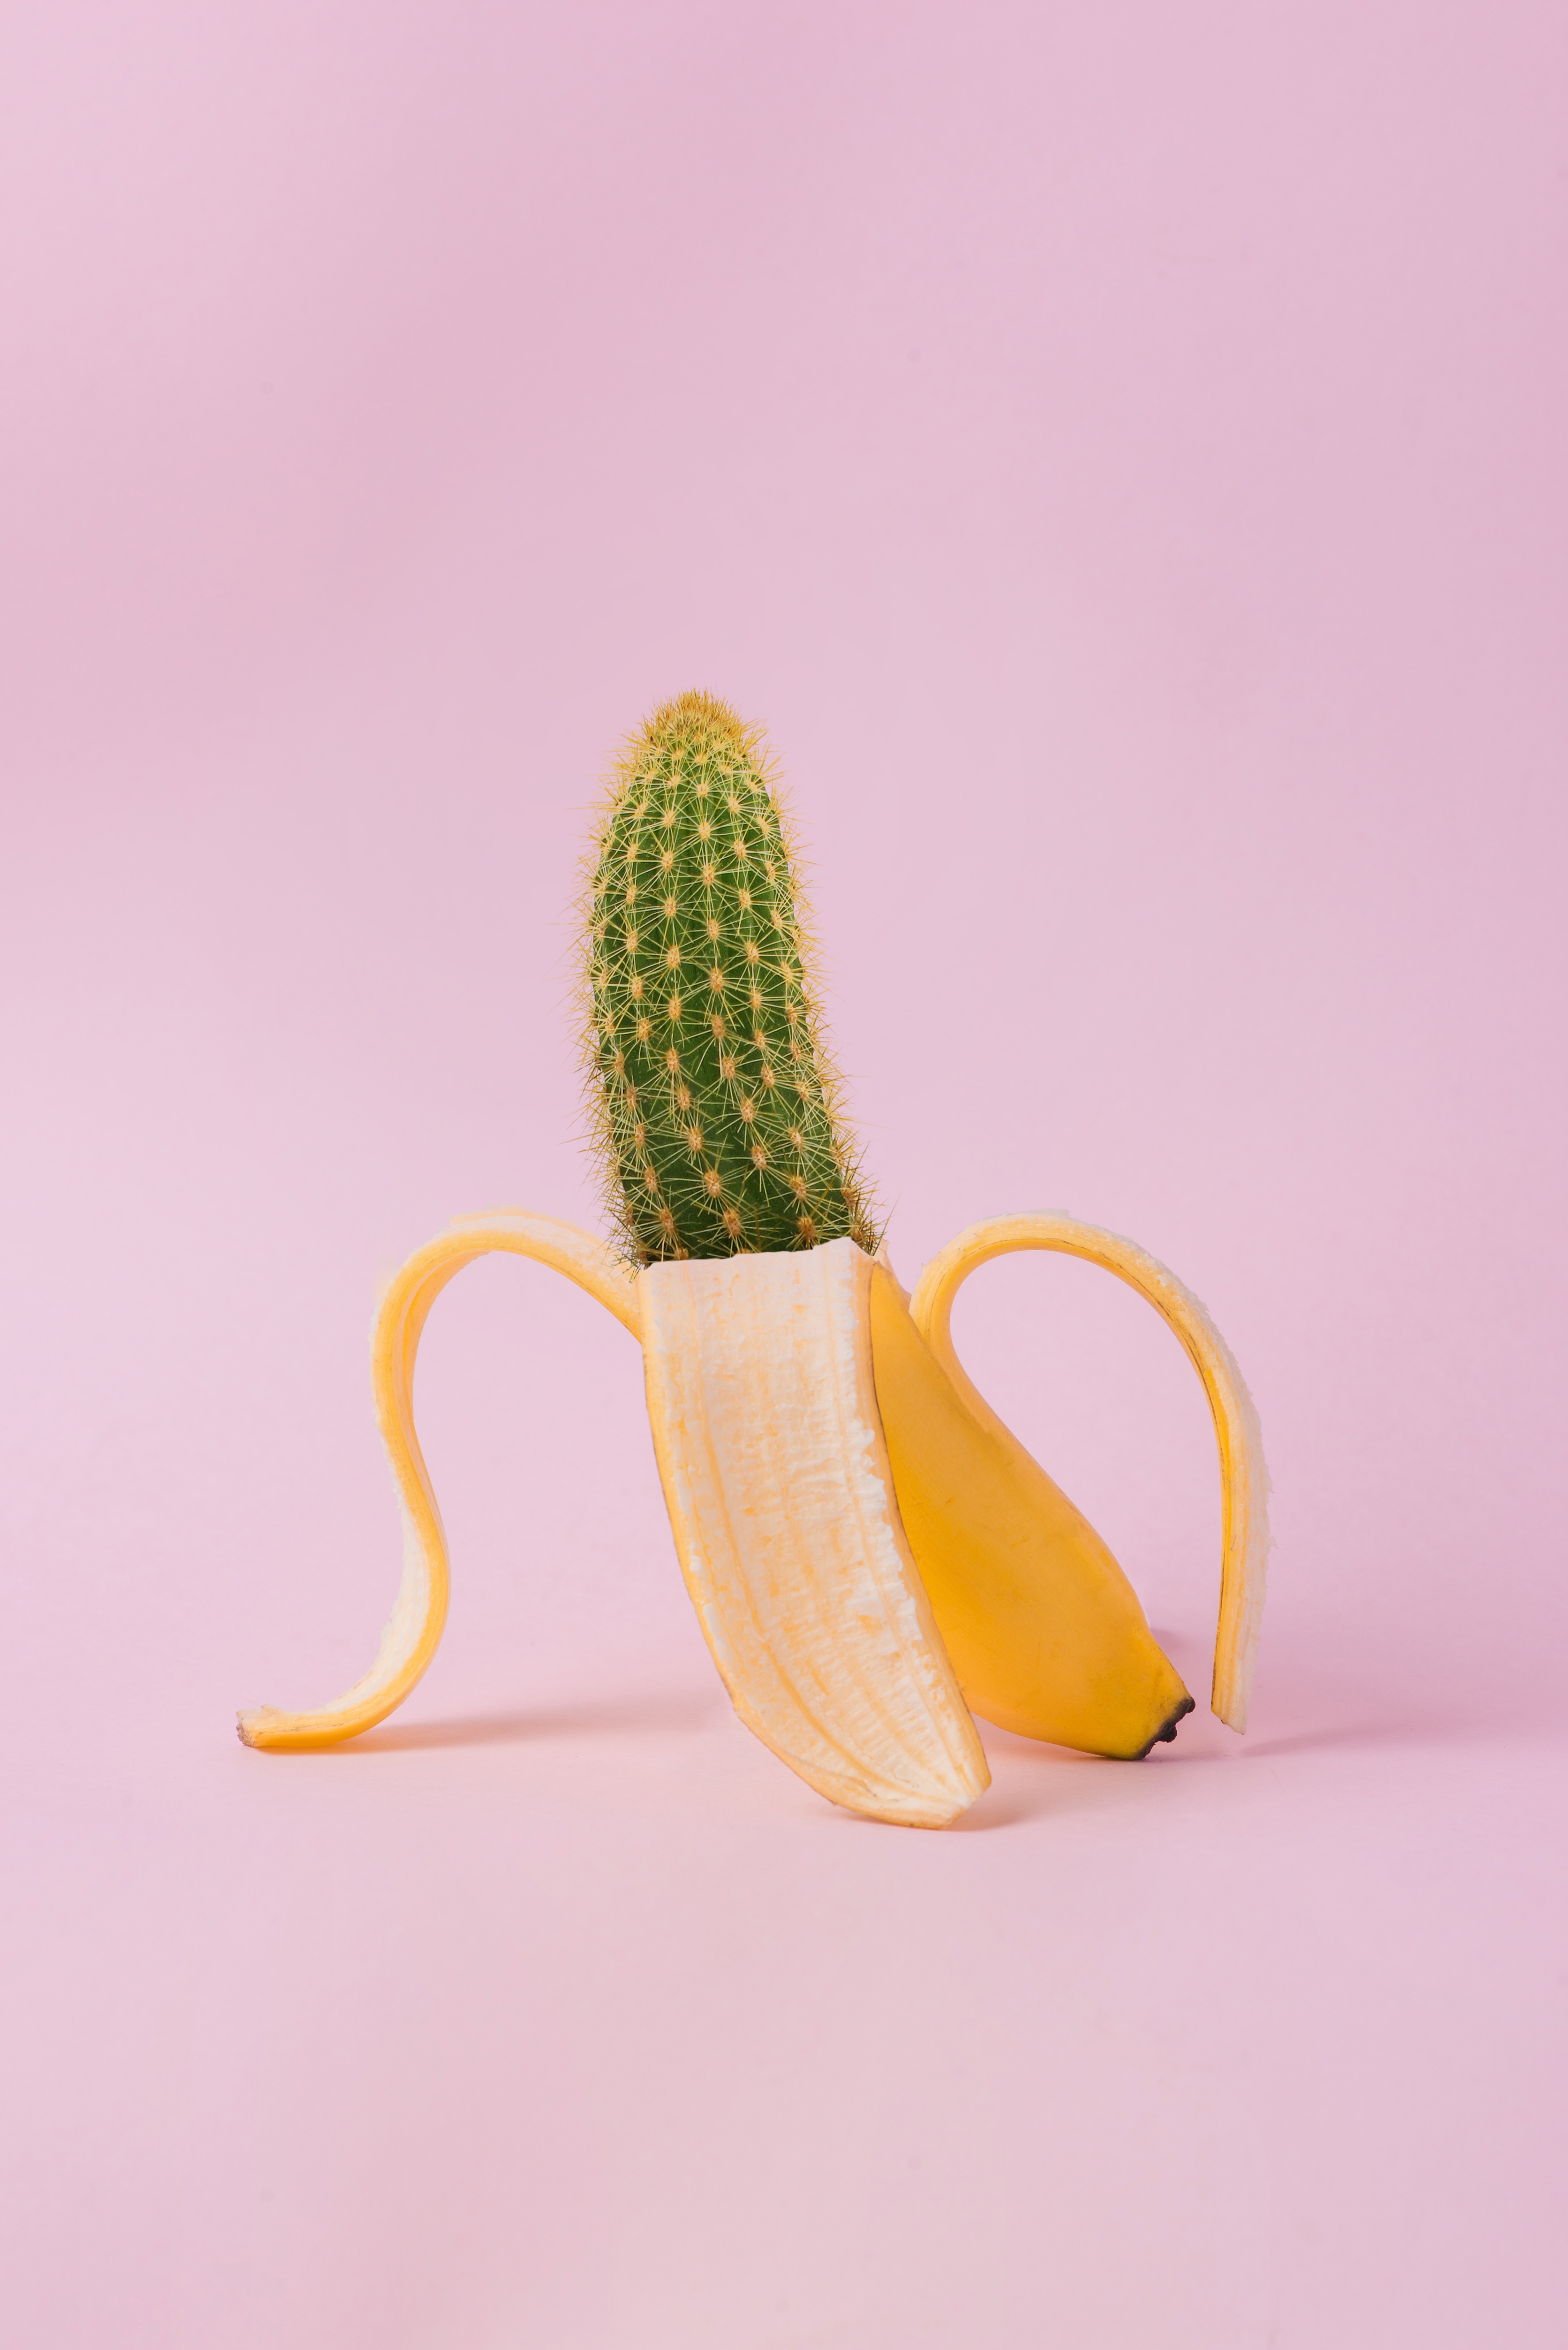 Latest Mobile Wallpaper banana, cactus, creative